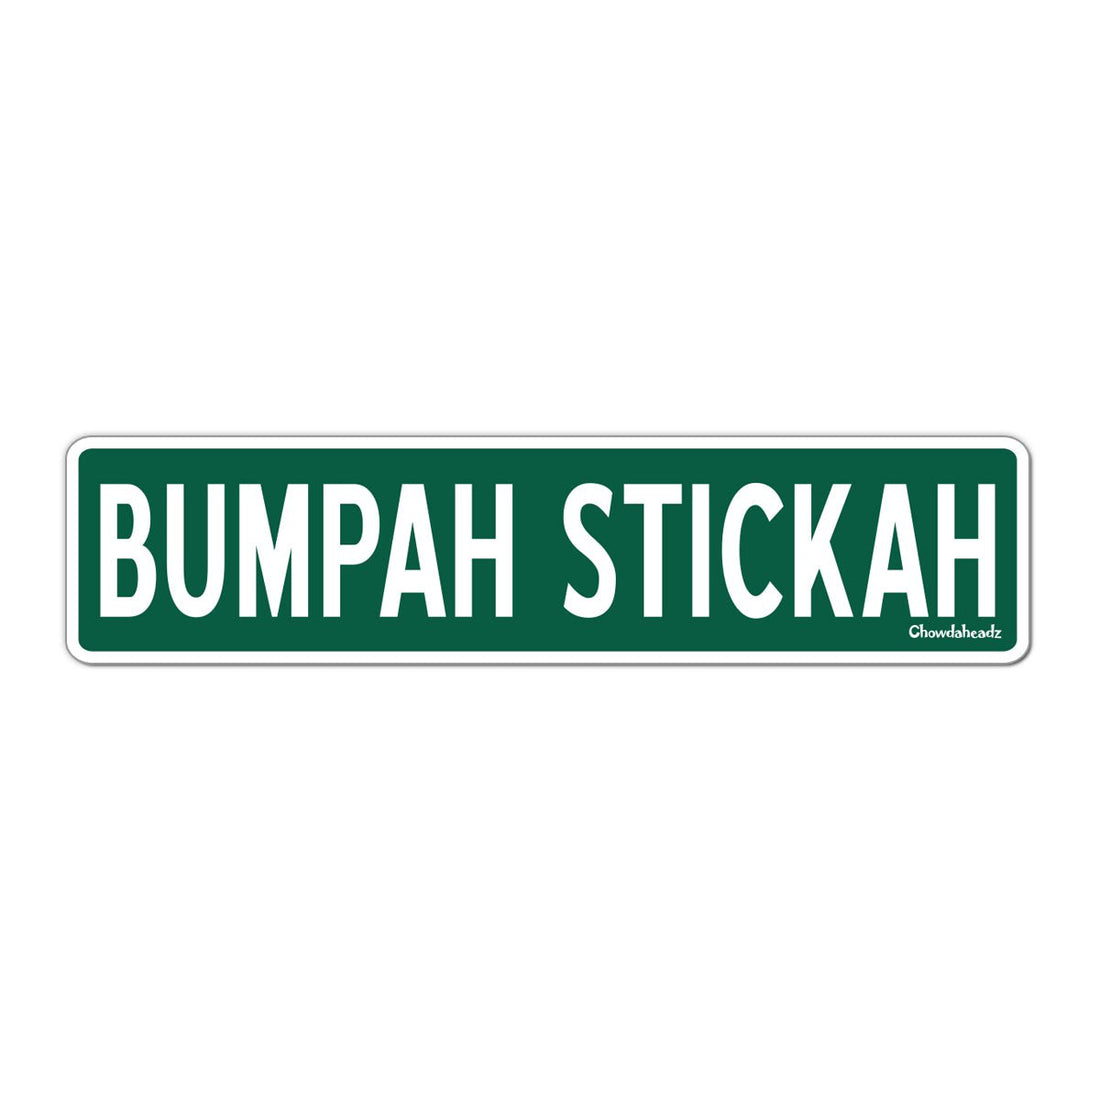 The Bumpah Stickah - Chowdaheadz